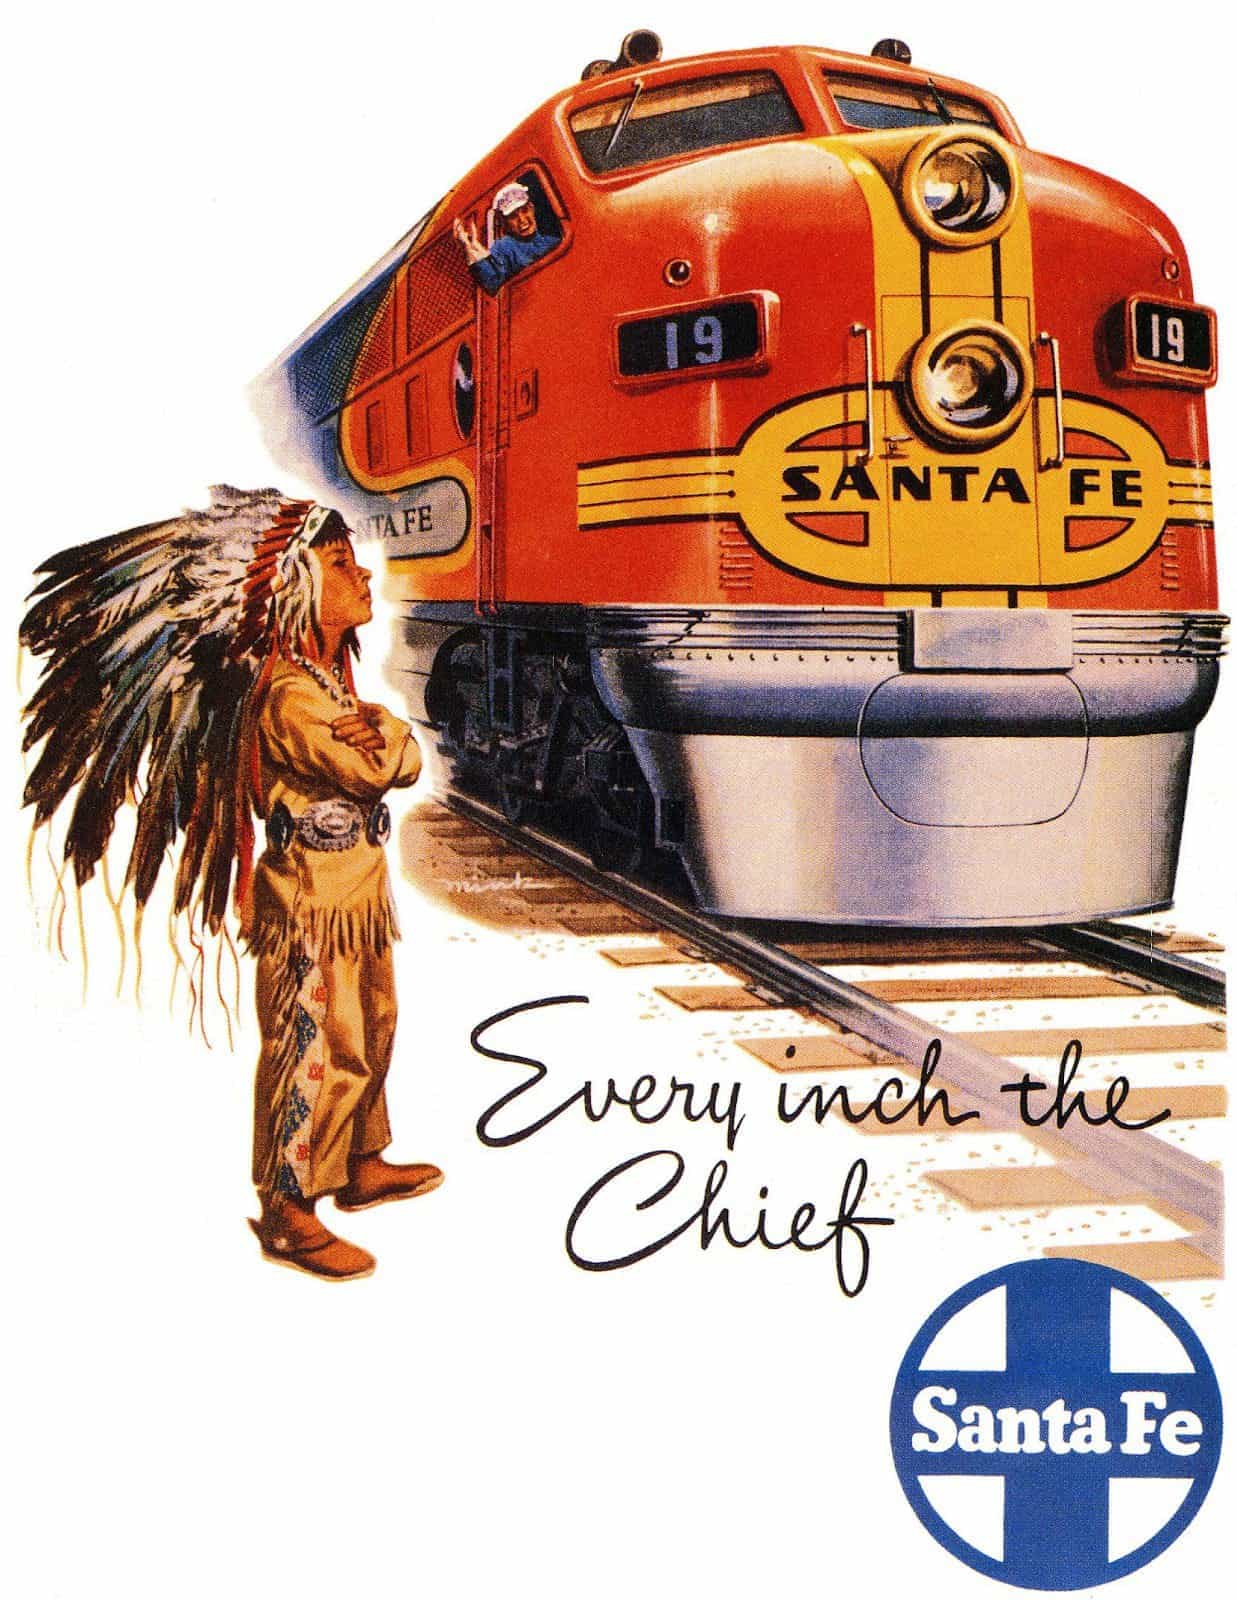 PRINT ADVERT RAIL TRAVEL CHIefS SANTA FE 1949 NATIVE AMERICAN INDIAN NOFL0751 